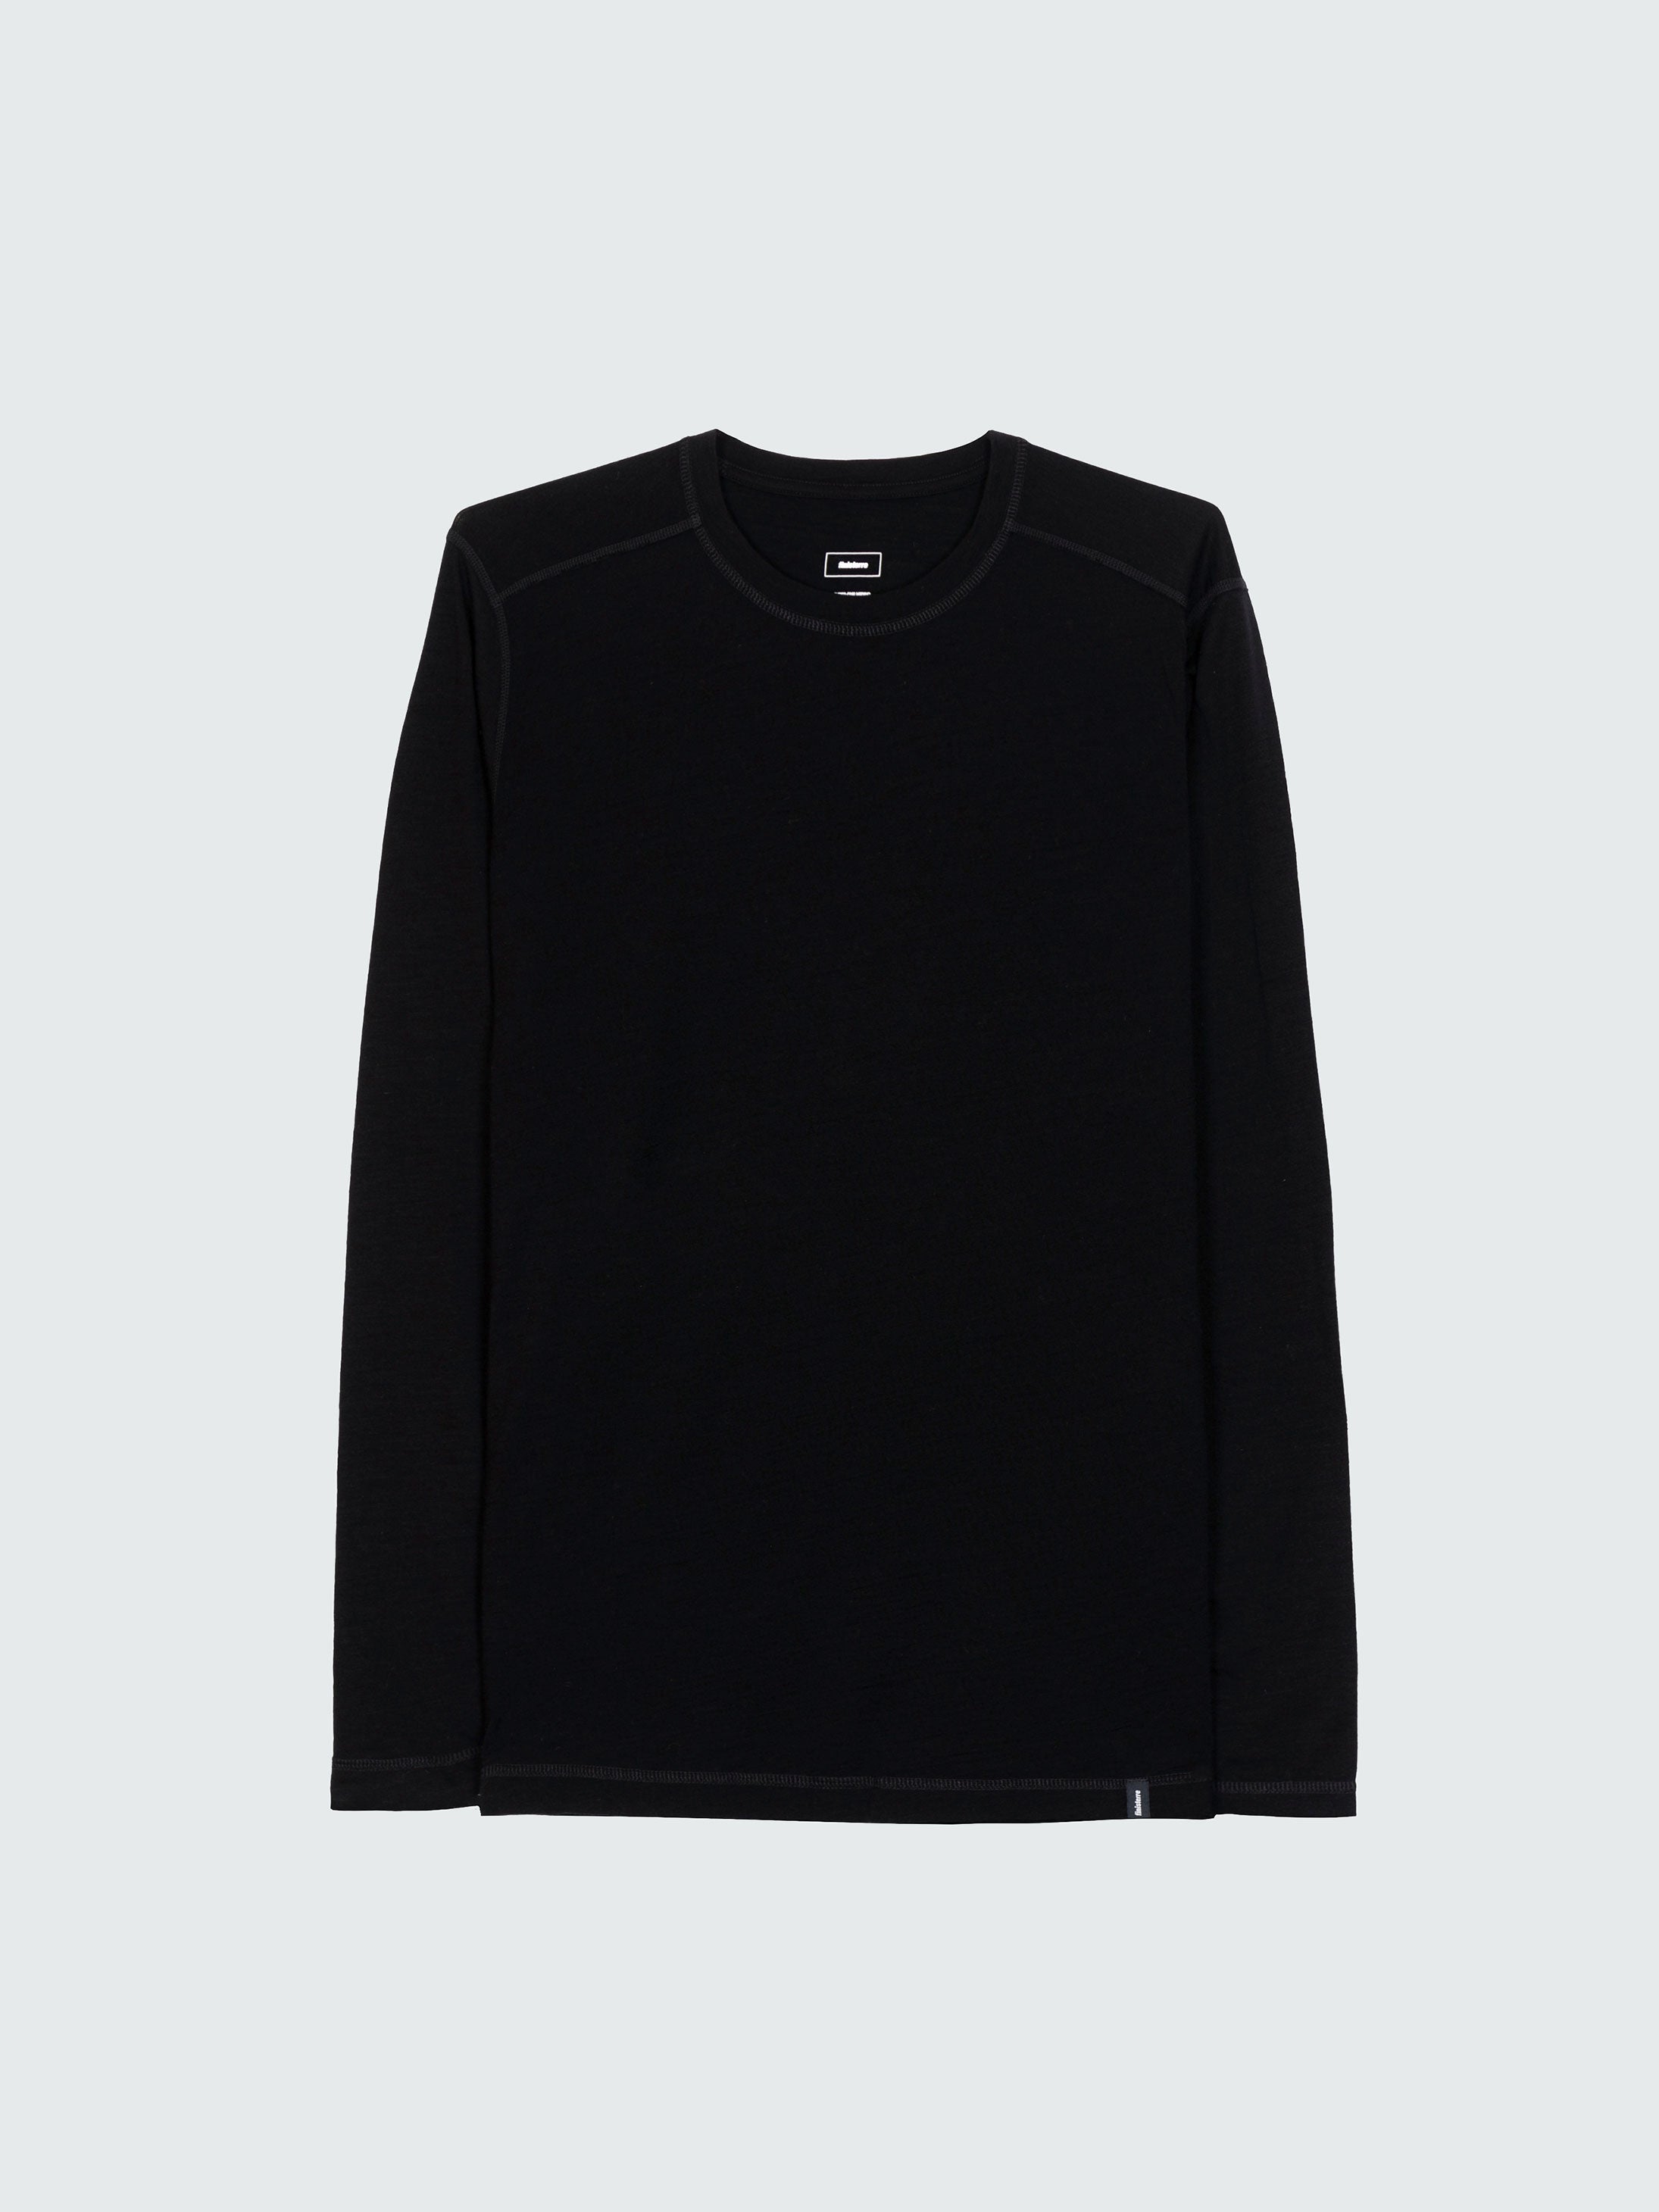 Men's Eddy 2.0 Merino Wool Long Sleeve Base Layer in Black | Finisterre